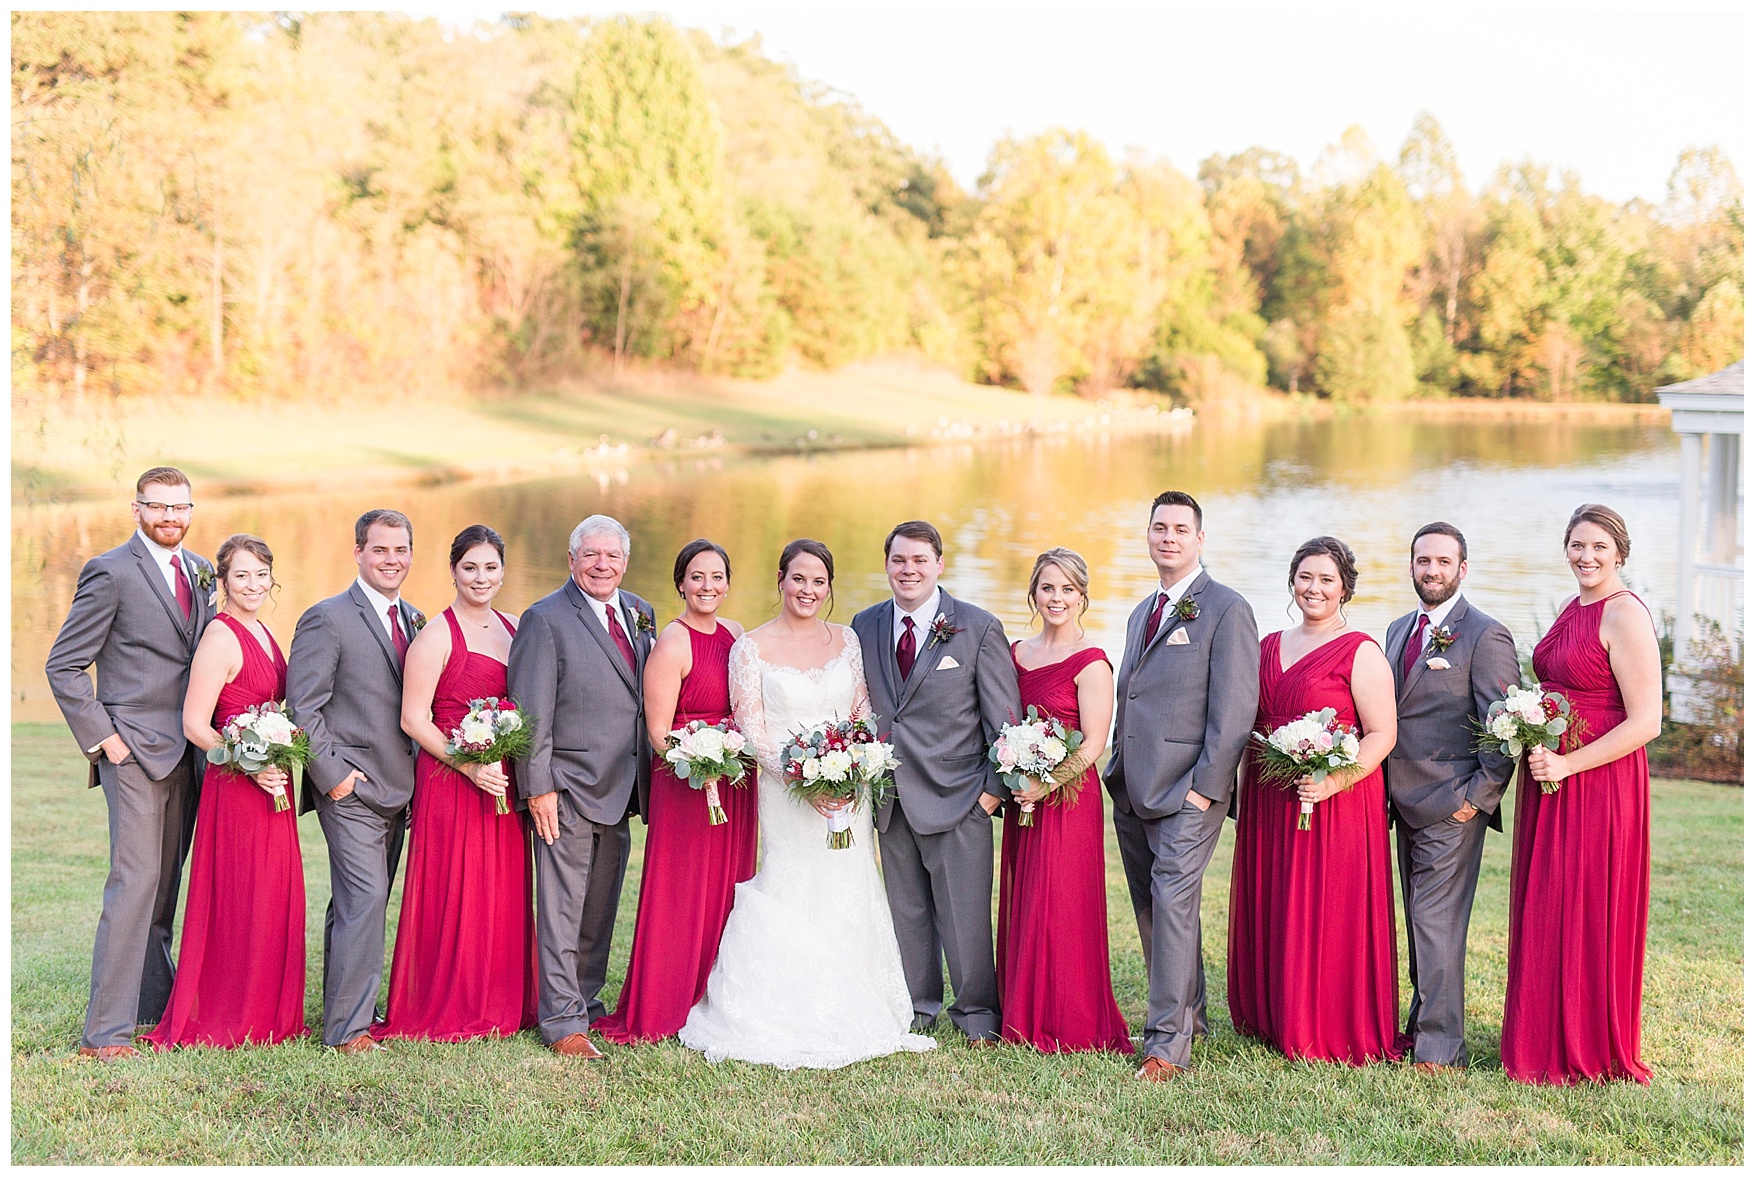 Charlottesville and Lynchburg Wedding Photographer || Fall Trivium Estate Wedding || Ashley Eiban Photography || www.ashleyeiban.com